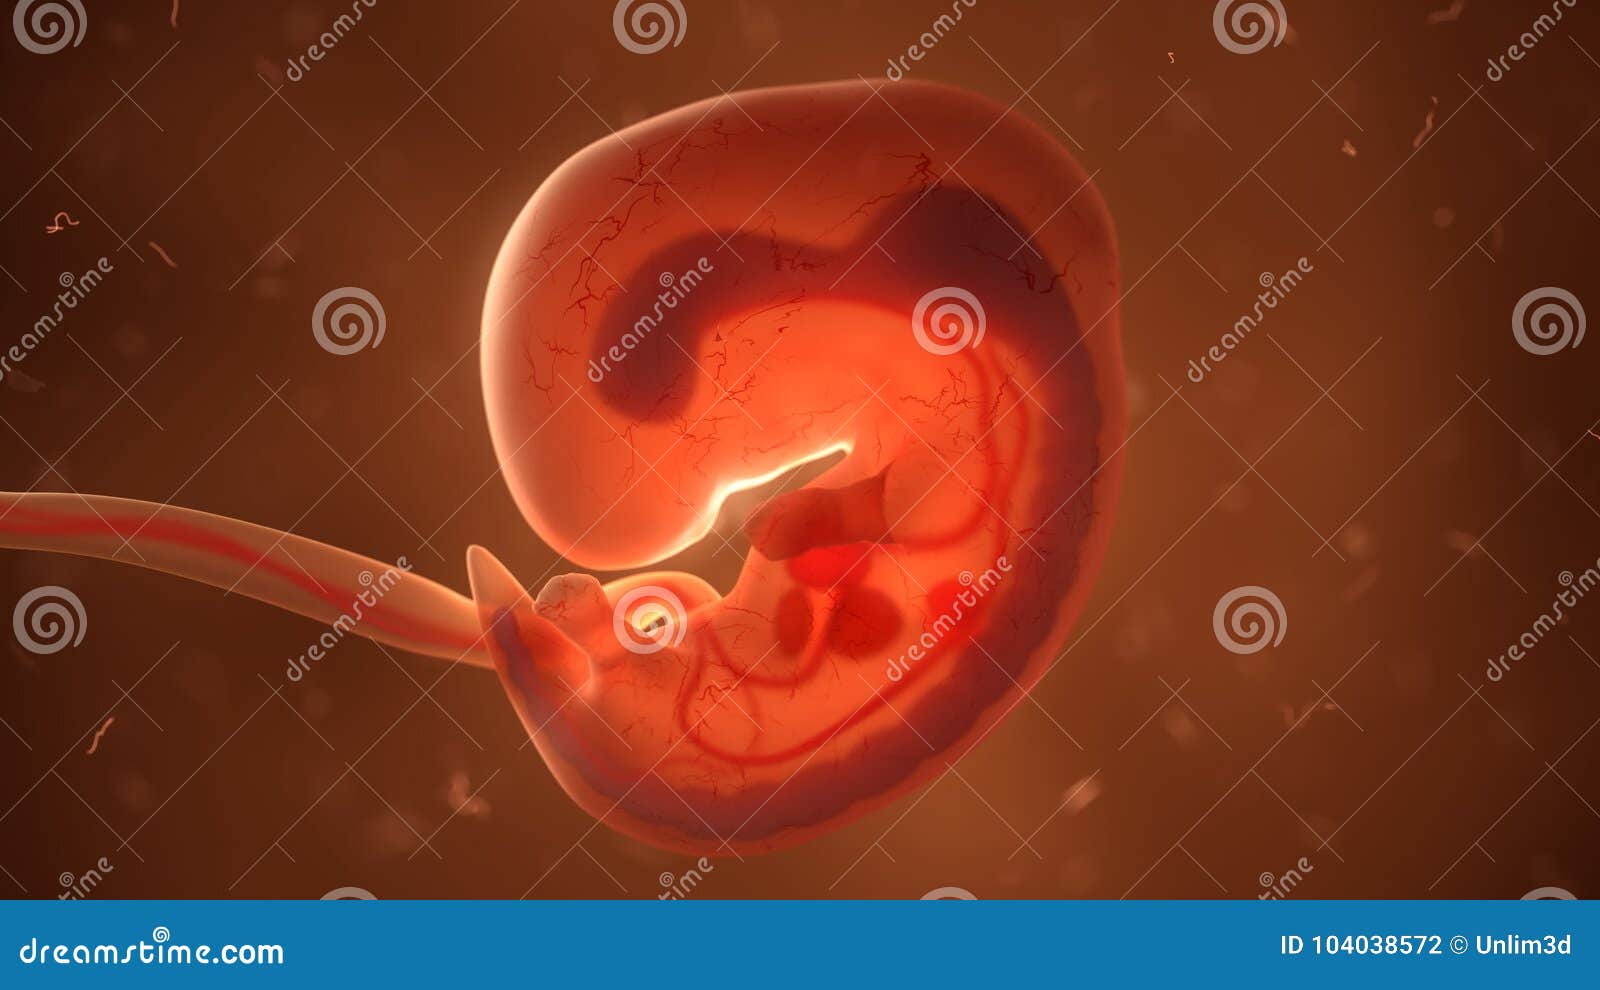 Human Fetus with Internal Organs, 3d Illustration Stock Illustration -  Illustration of human, fetus: 104038572